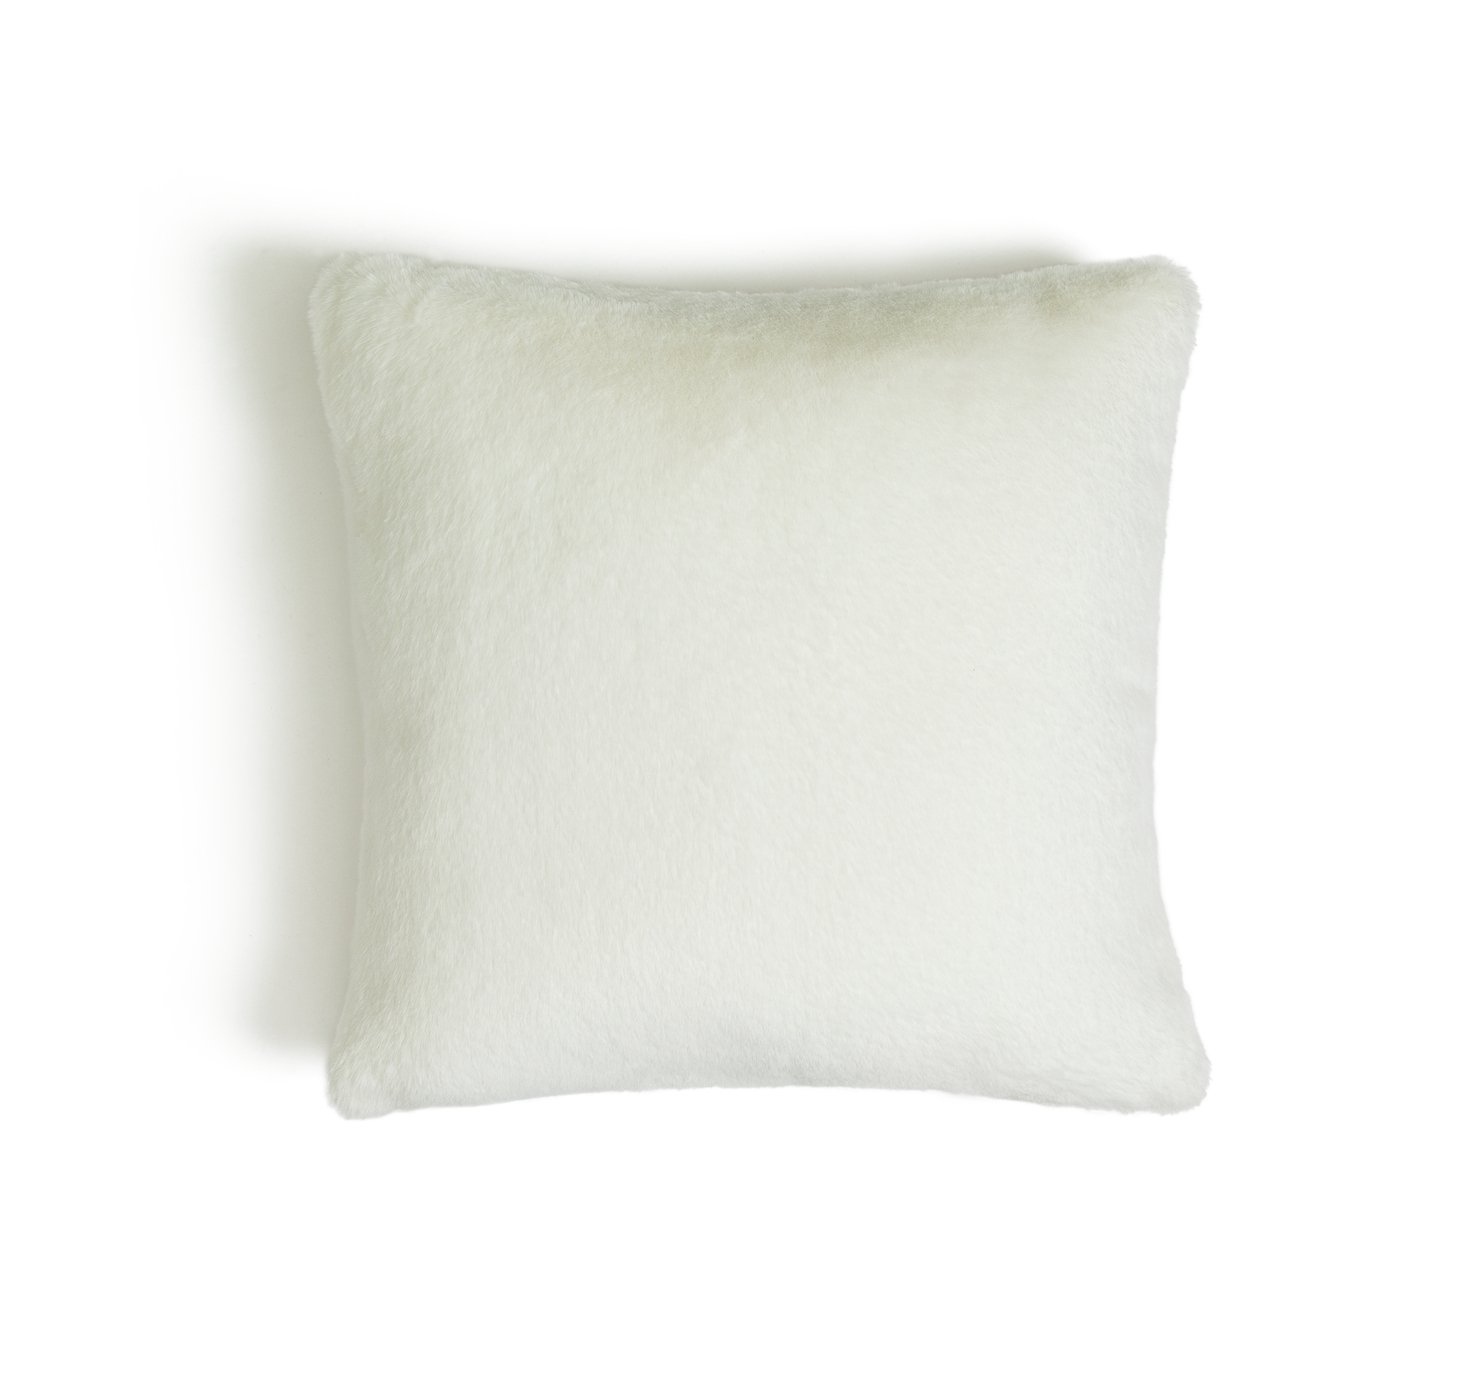 Habitat Plain Faux Fur Cushion - Cream - 43x43cm